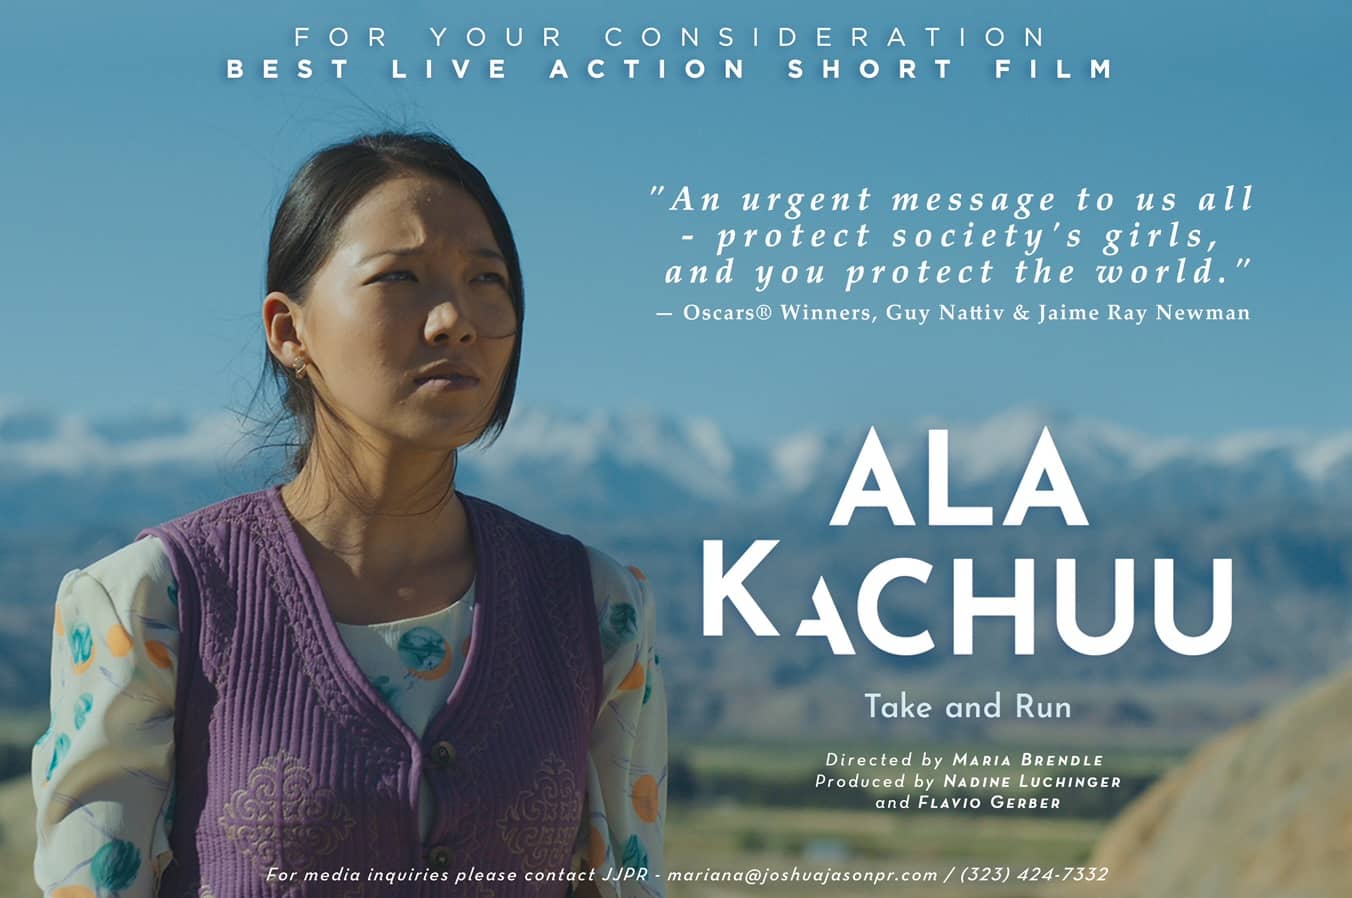 ALA KACHUU - Take and Run - Q&A with the Film Team on Vimeo